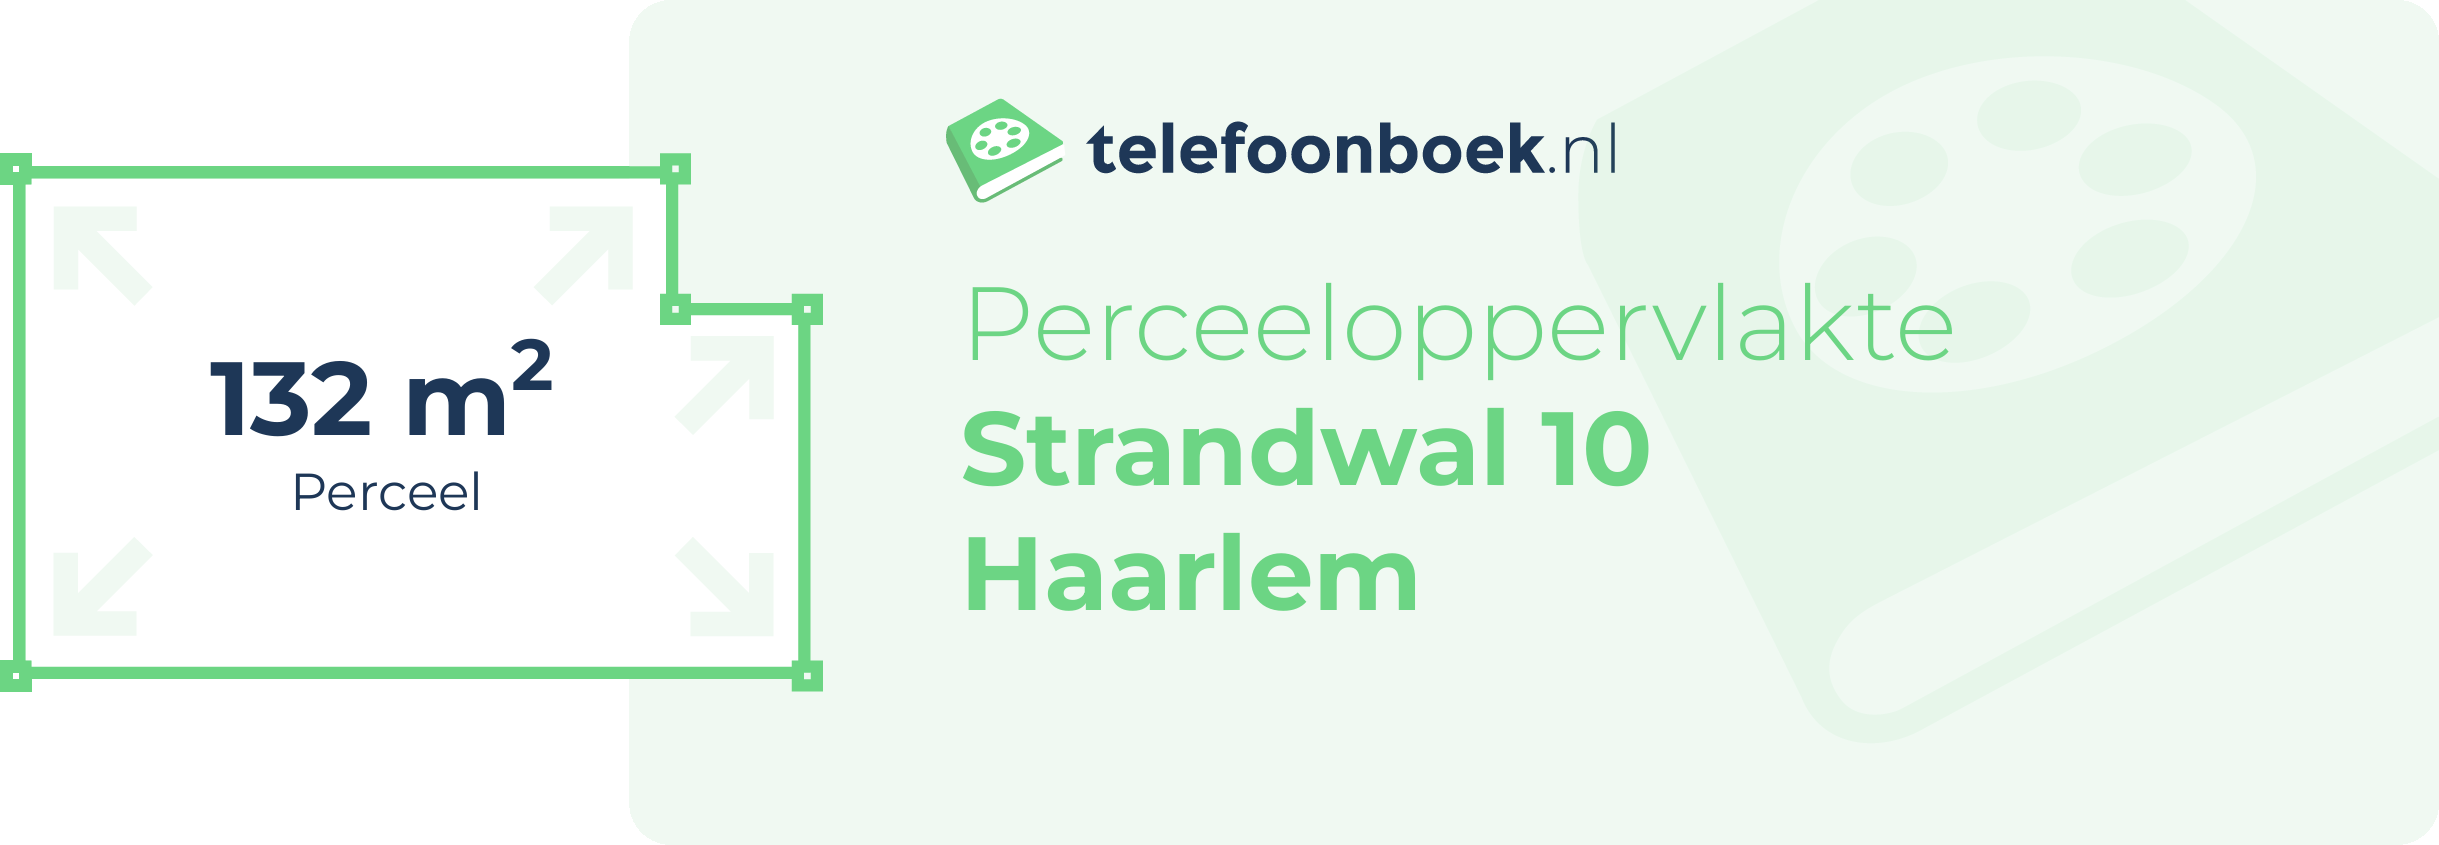 Perceeloppervlakte Strandwal 10 Haarlem